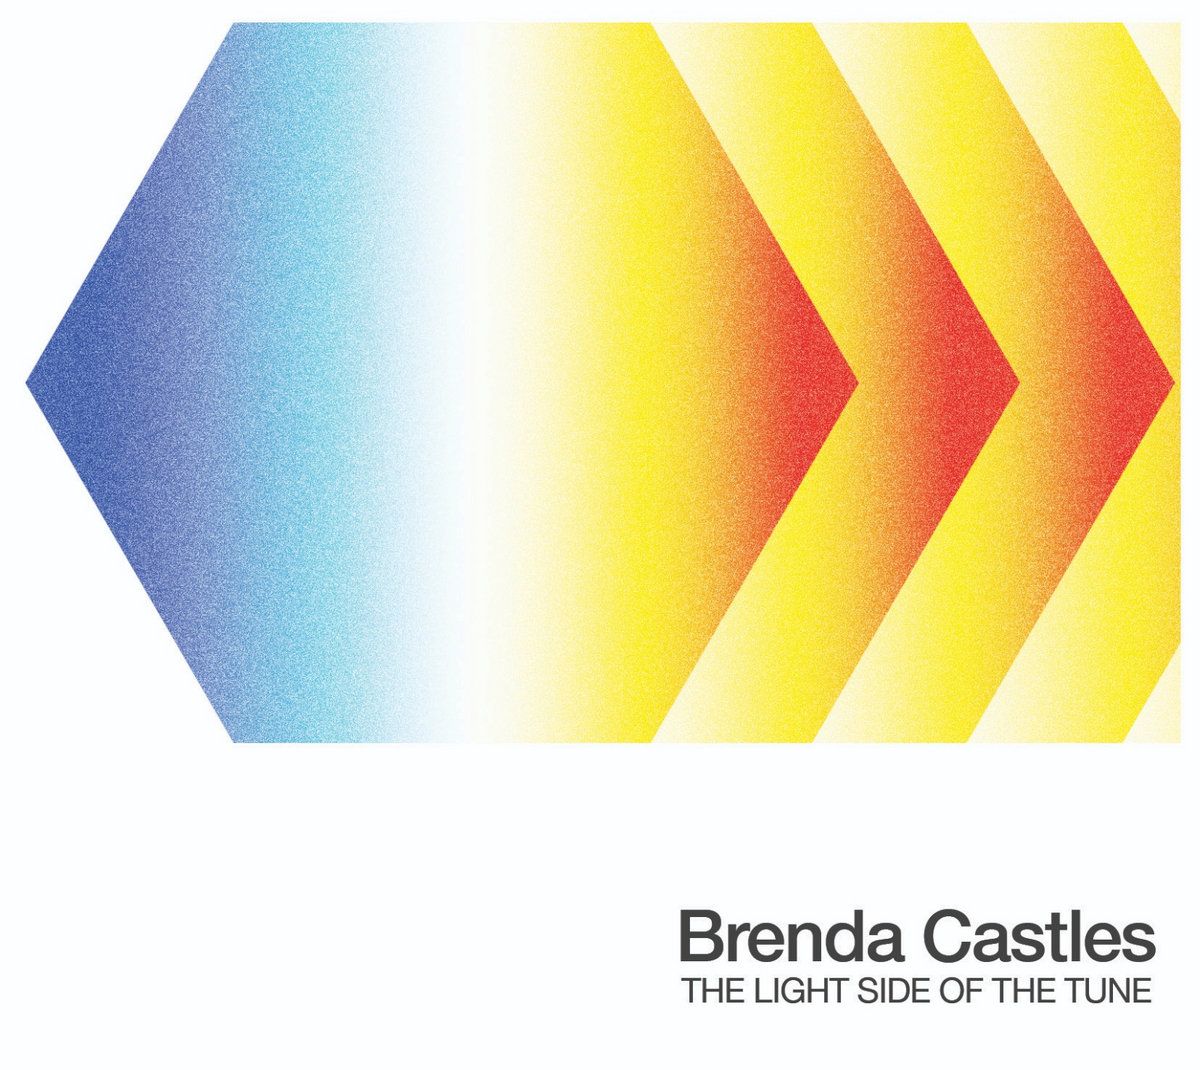 Brenda castles